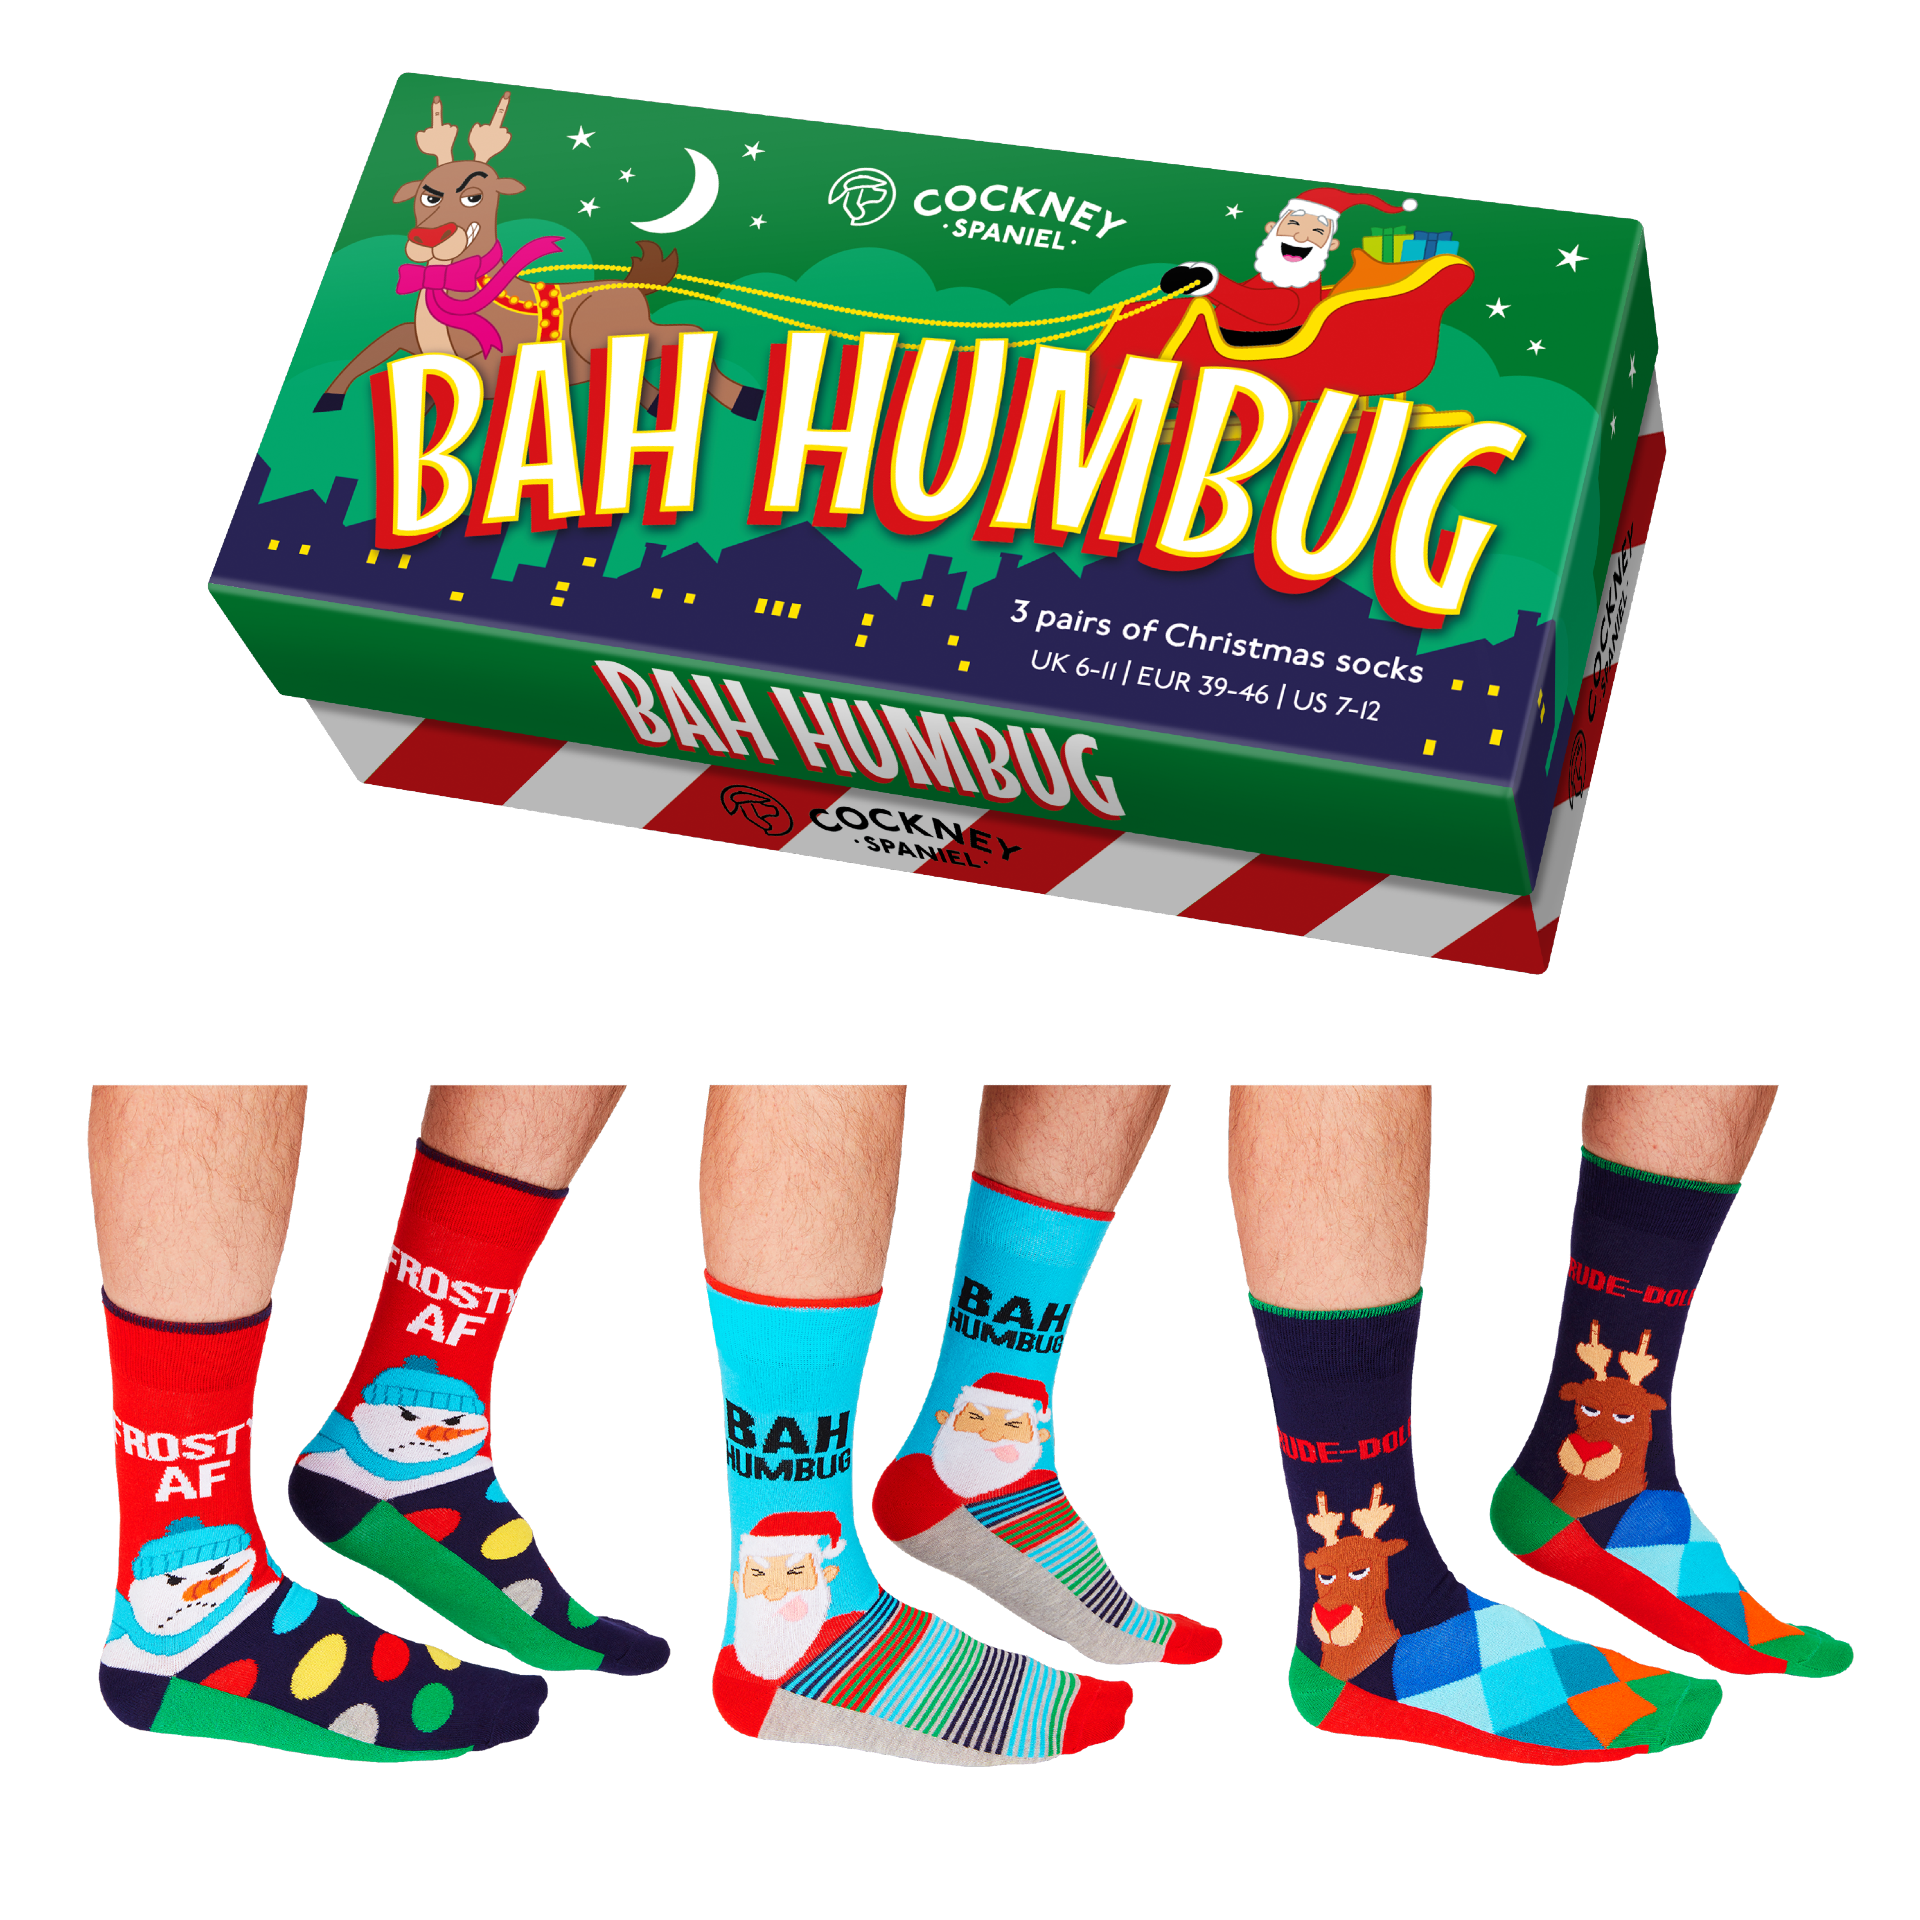 Cockney Spaniel 3 Pairs of Bah Humbug Men's Christmas Socks